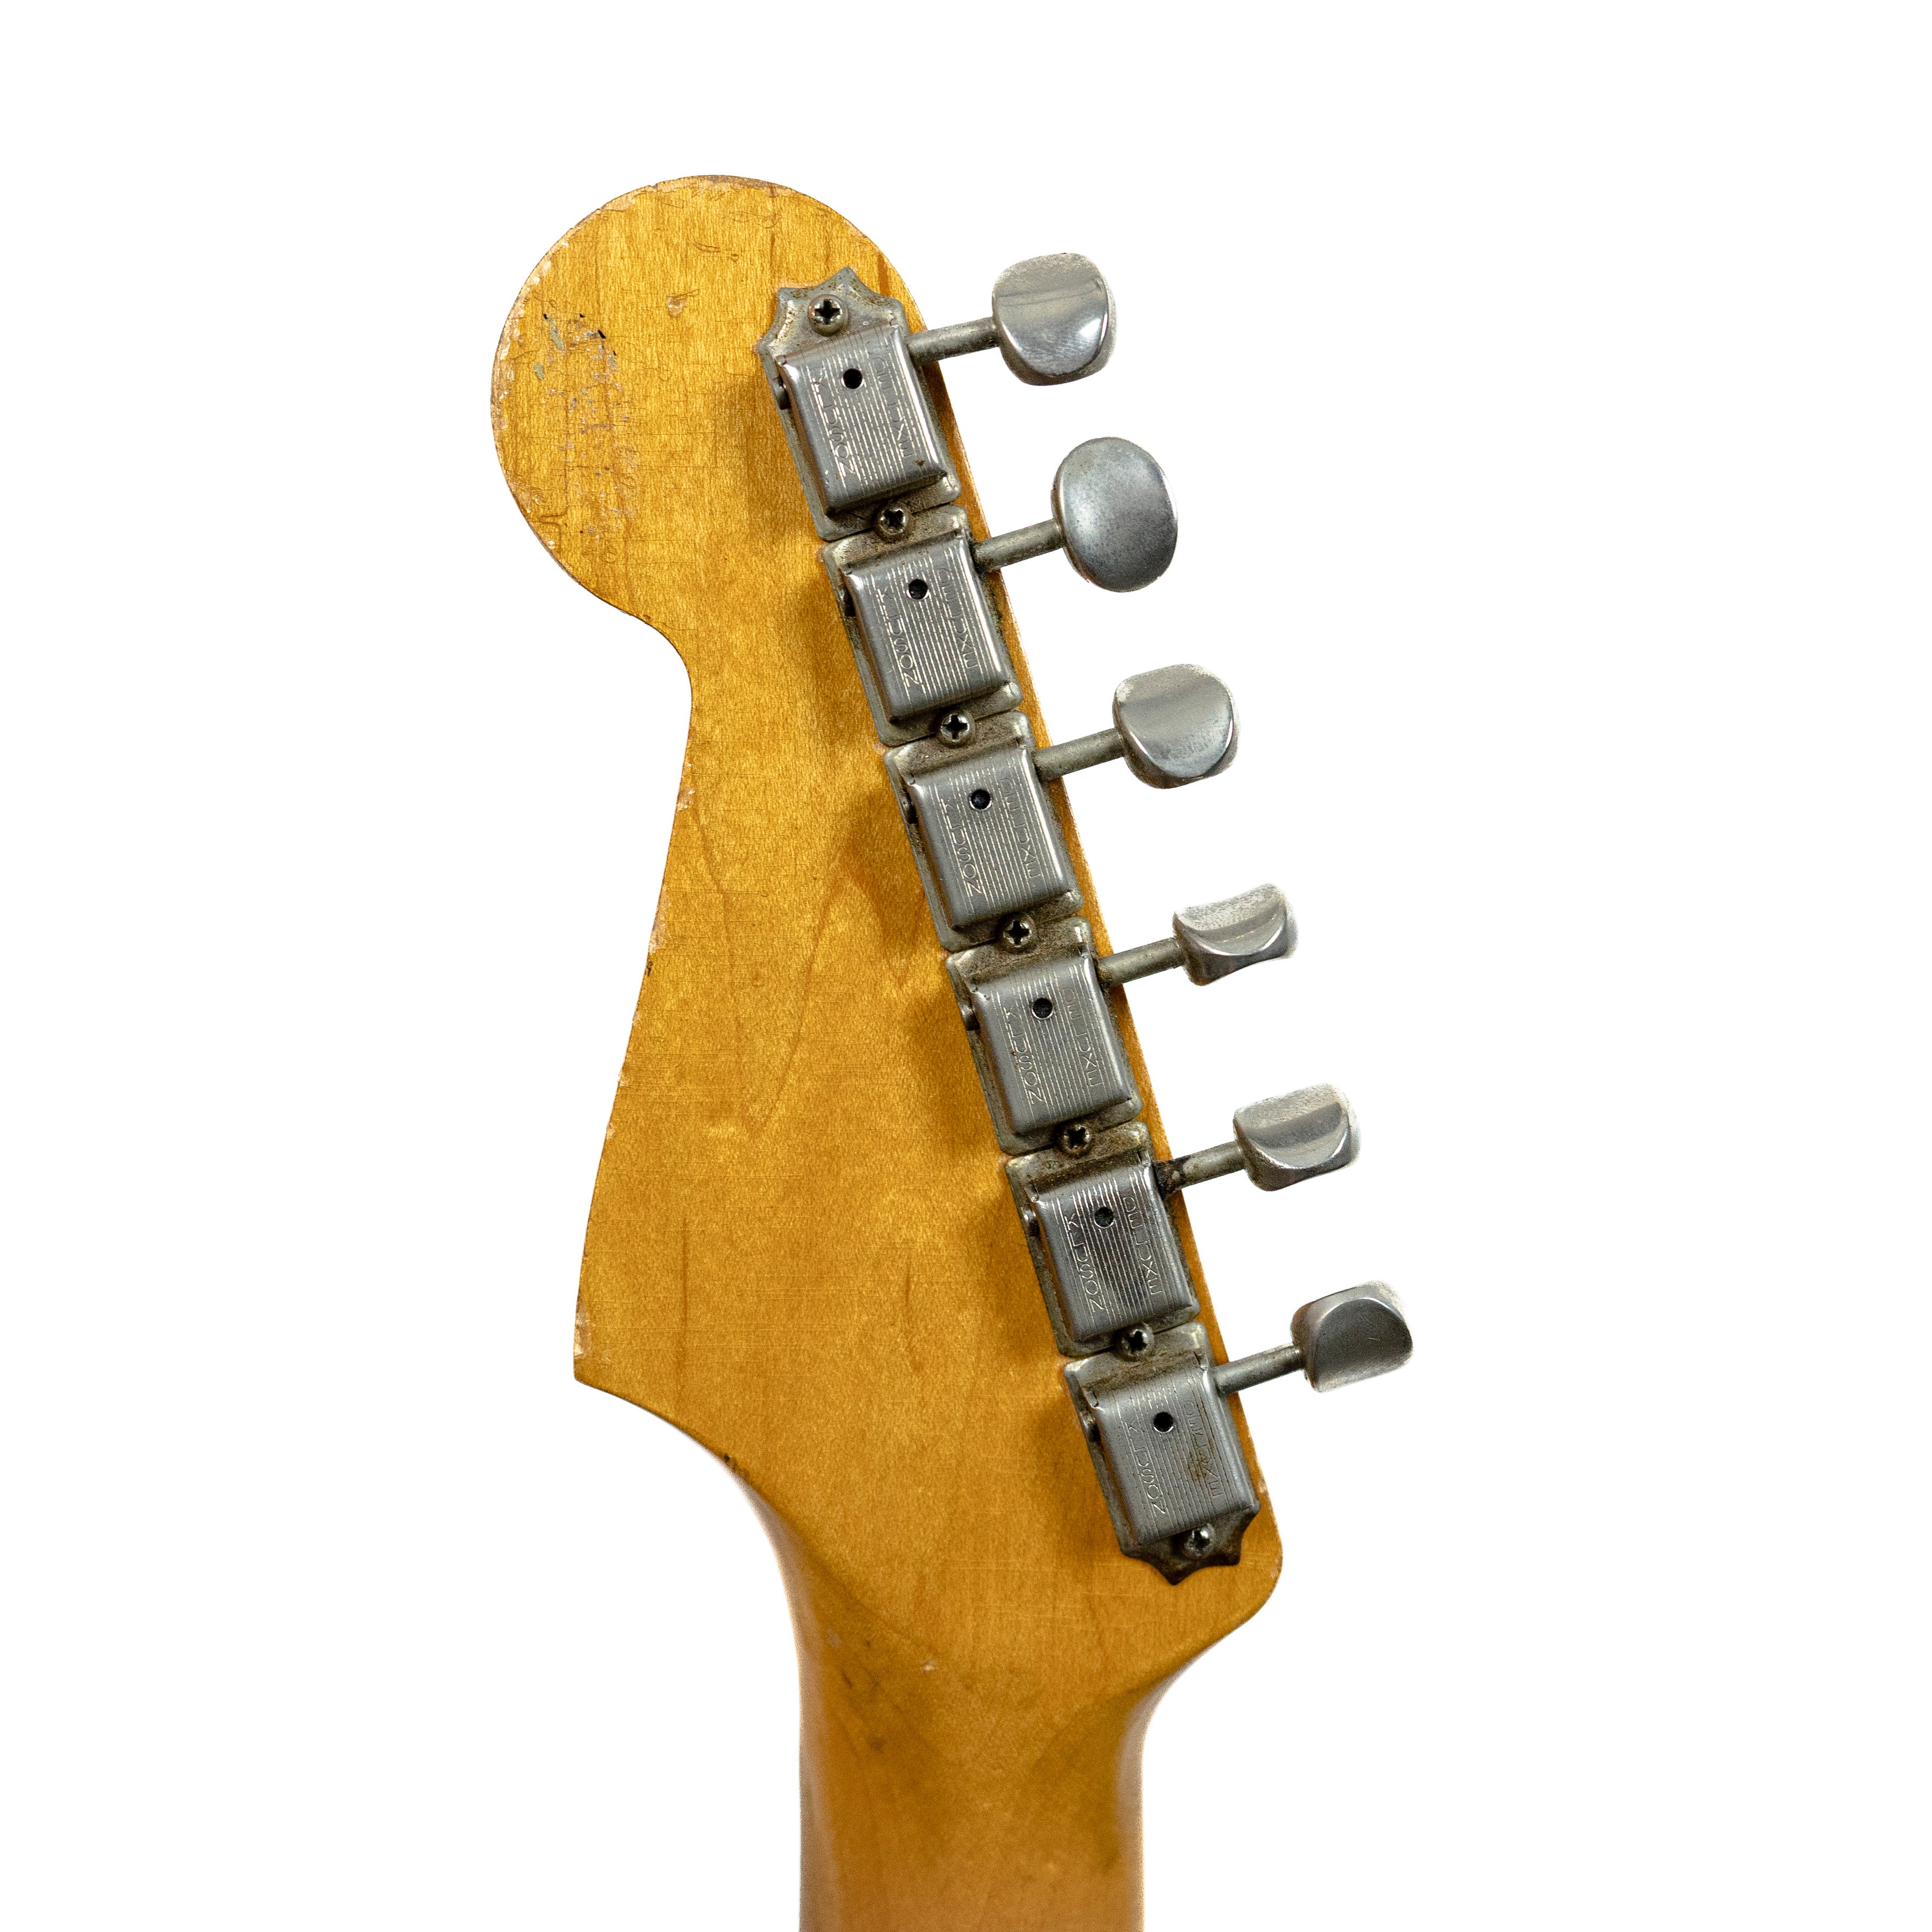 Fender 1965 Stratocaster 3-Tone Sunburst (Played by Patti Smith)